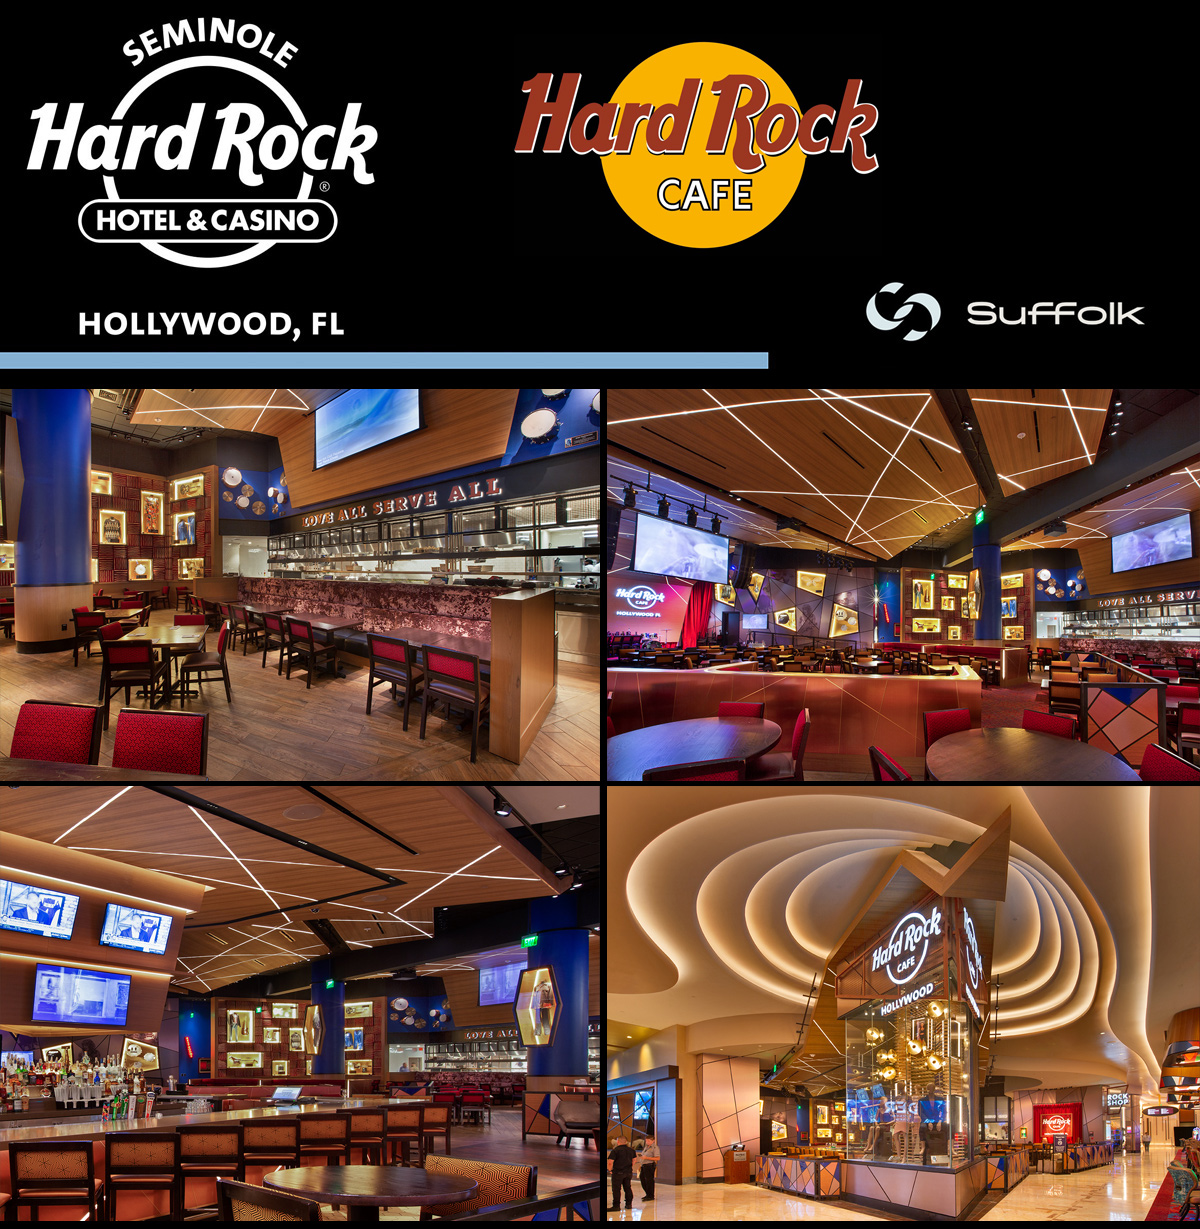 hard rock casino hollywood fl serves buffet